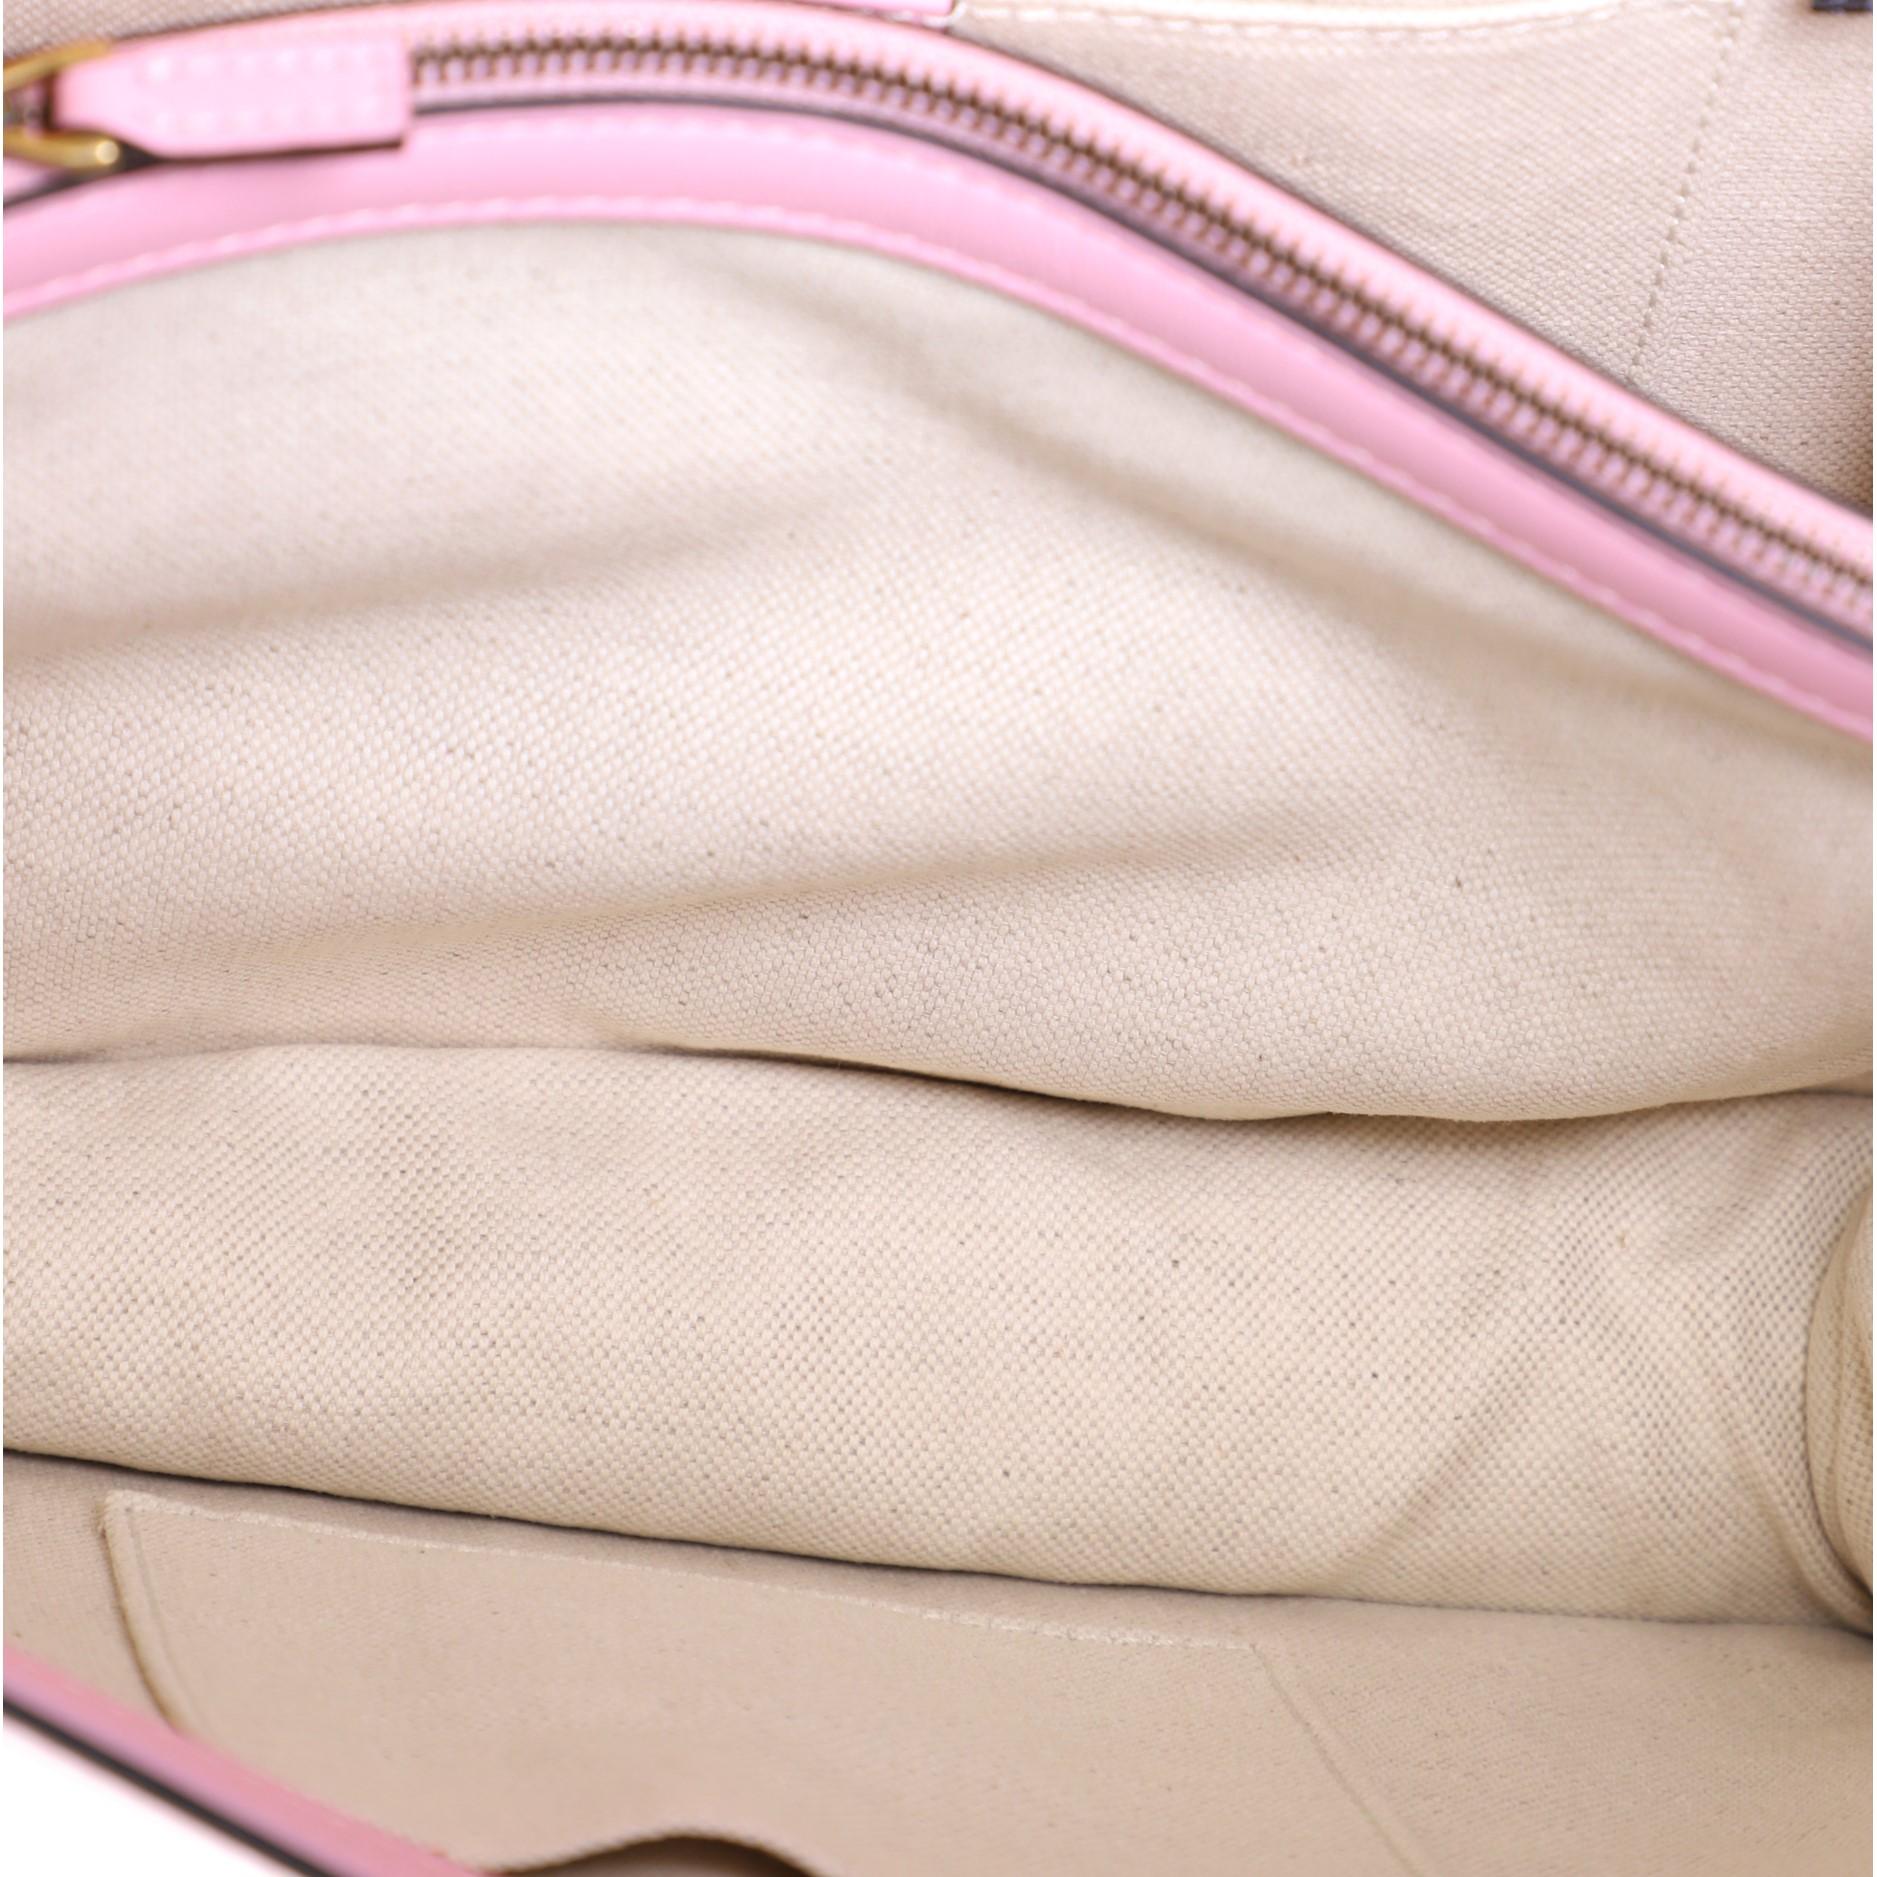 Gucci Dionysus Bamboo Top Handle Bag Colorblock Leather Medium 1